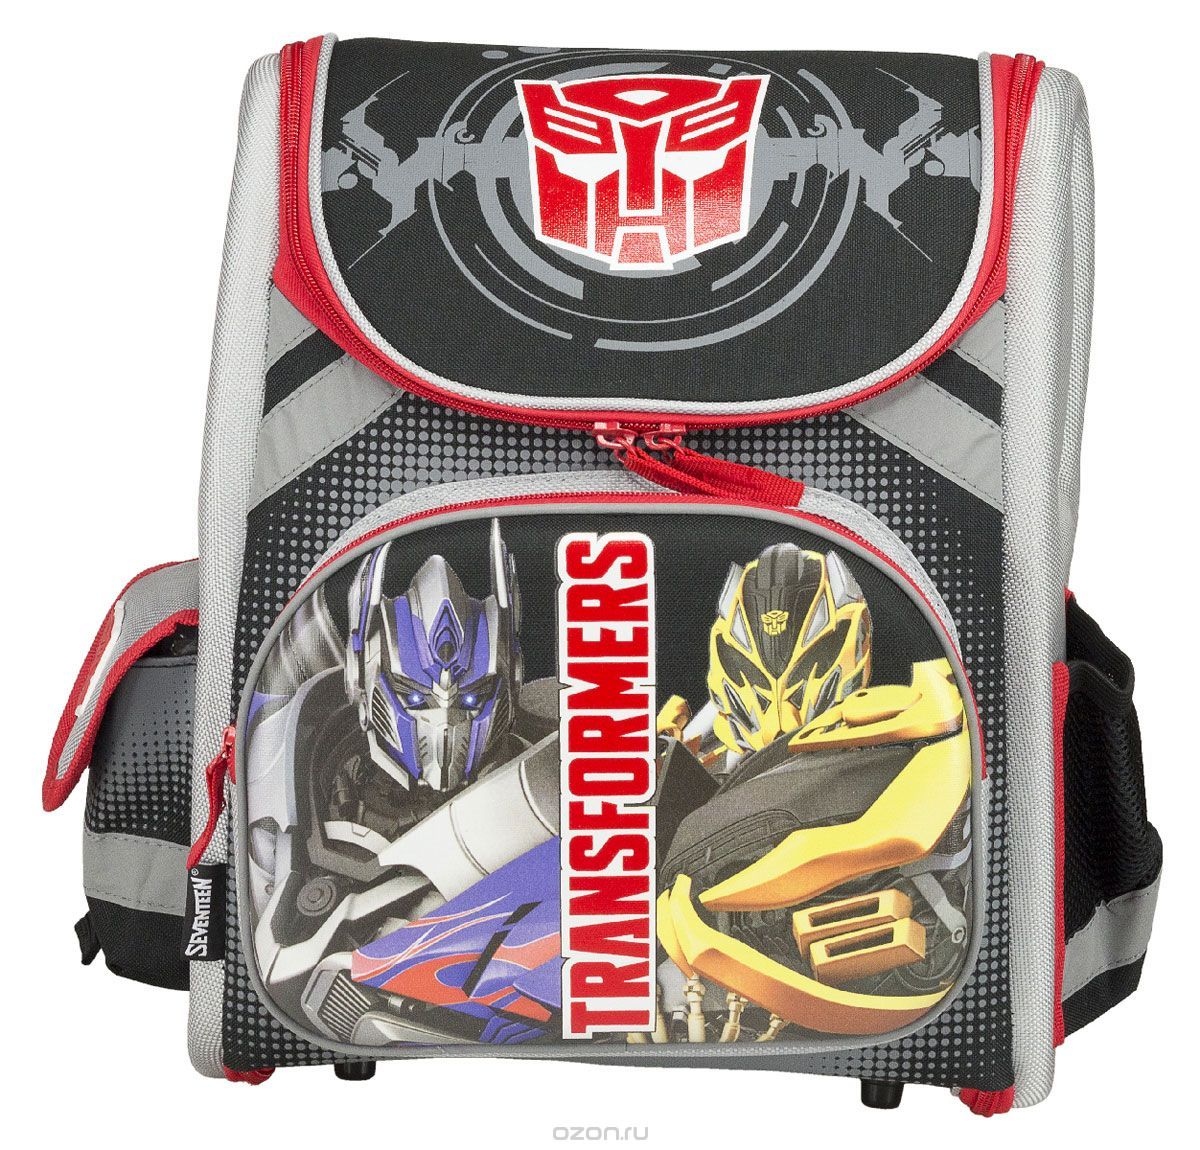    EVA- Transformers Prime  35  31  14 